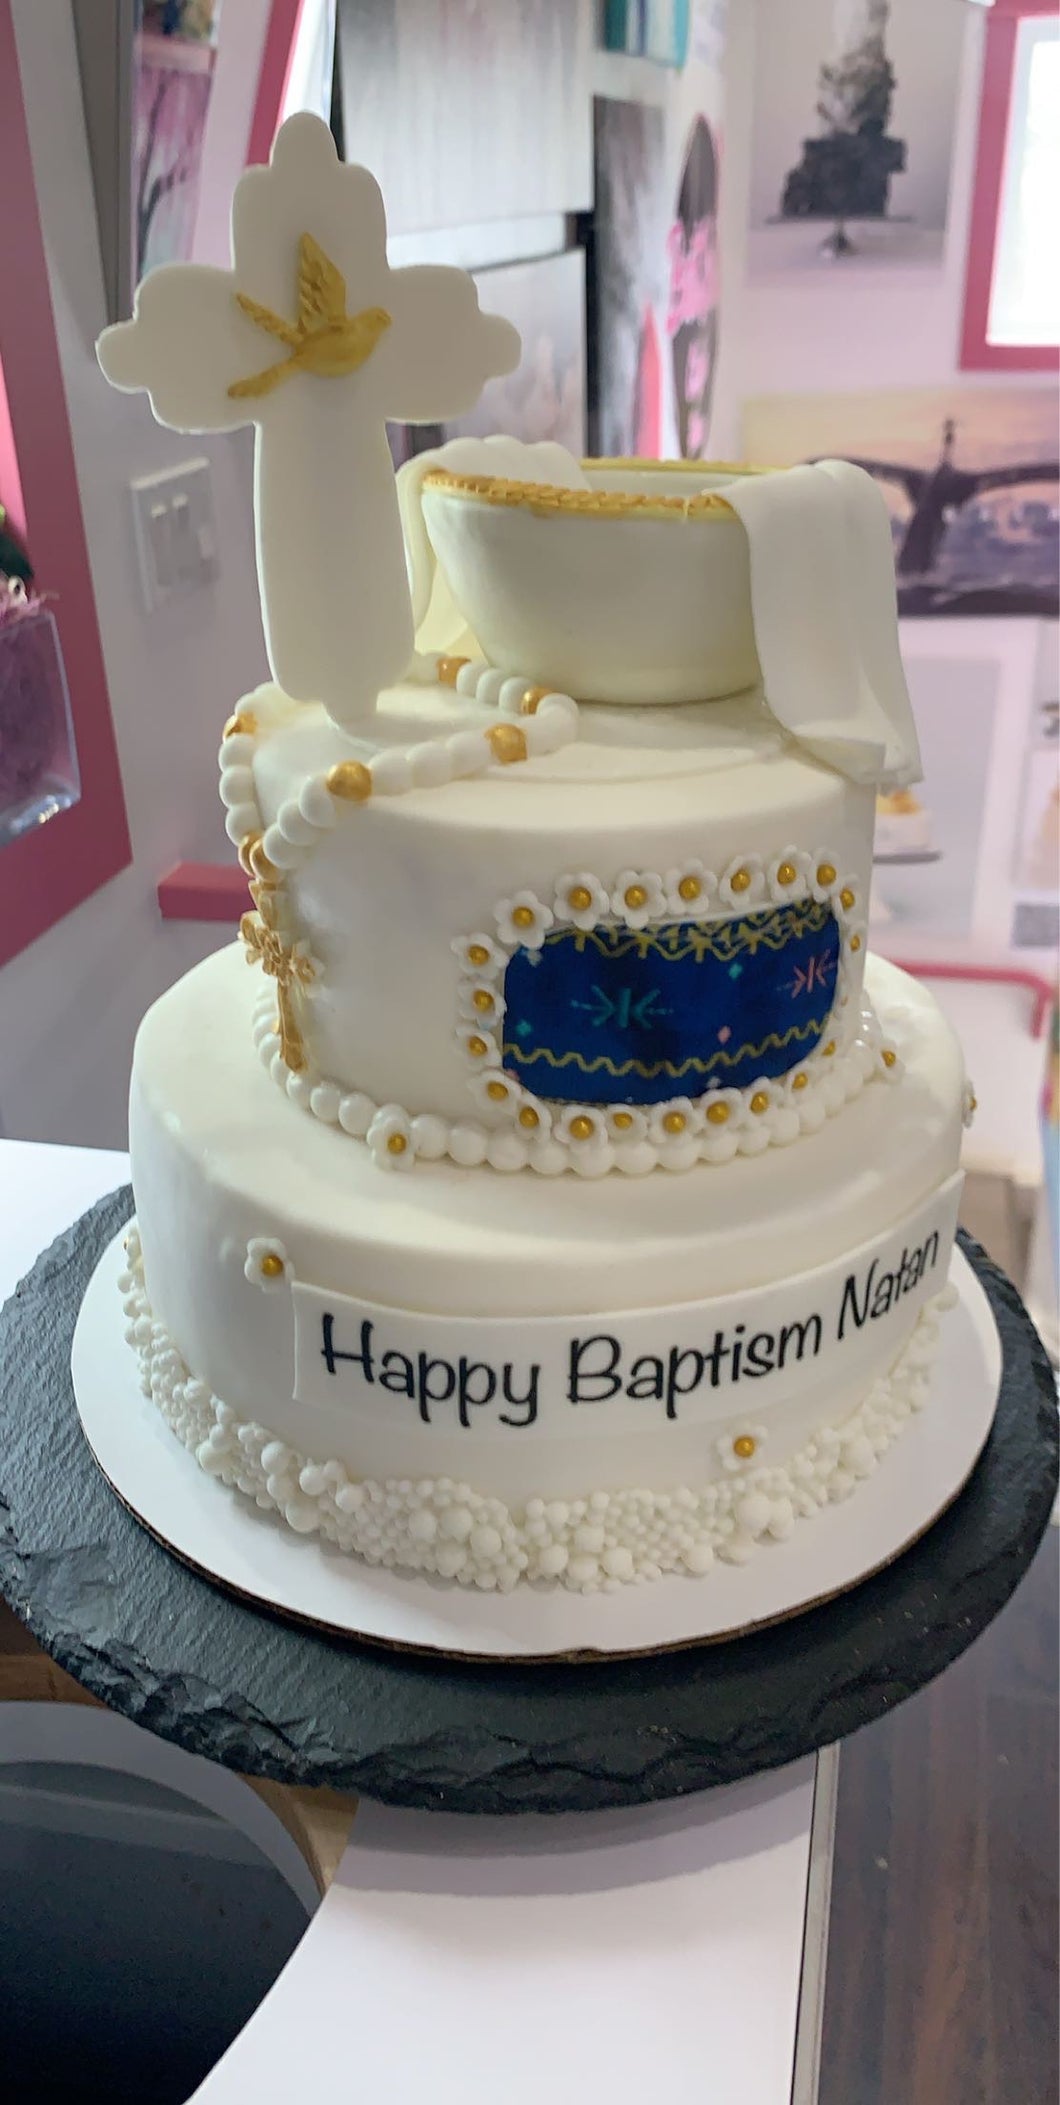 Happy Baptism Cake